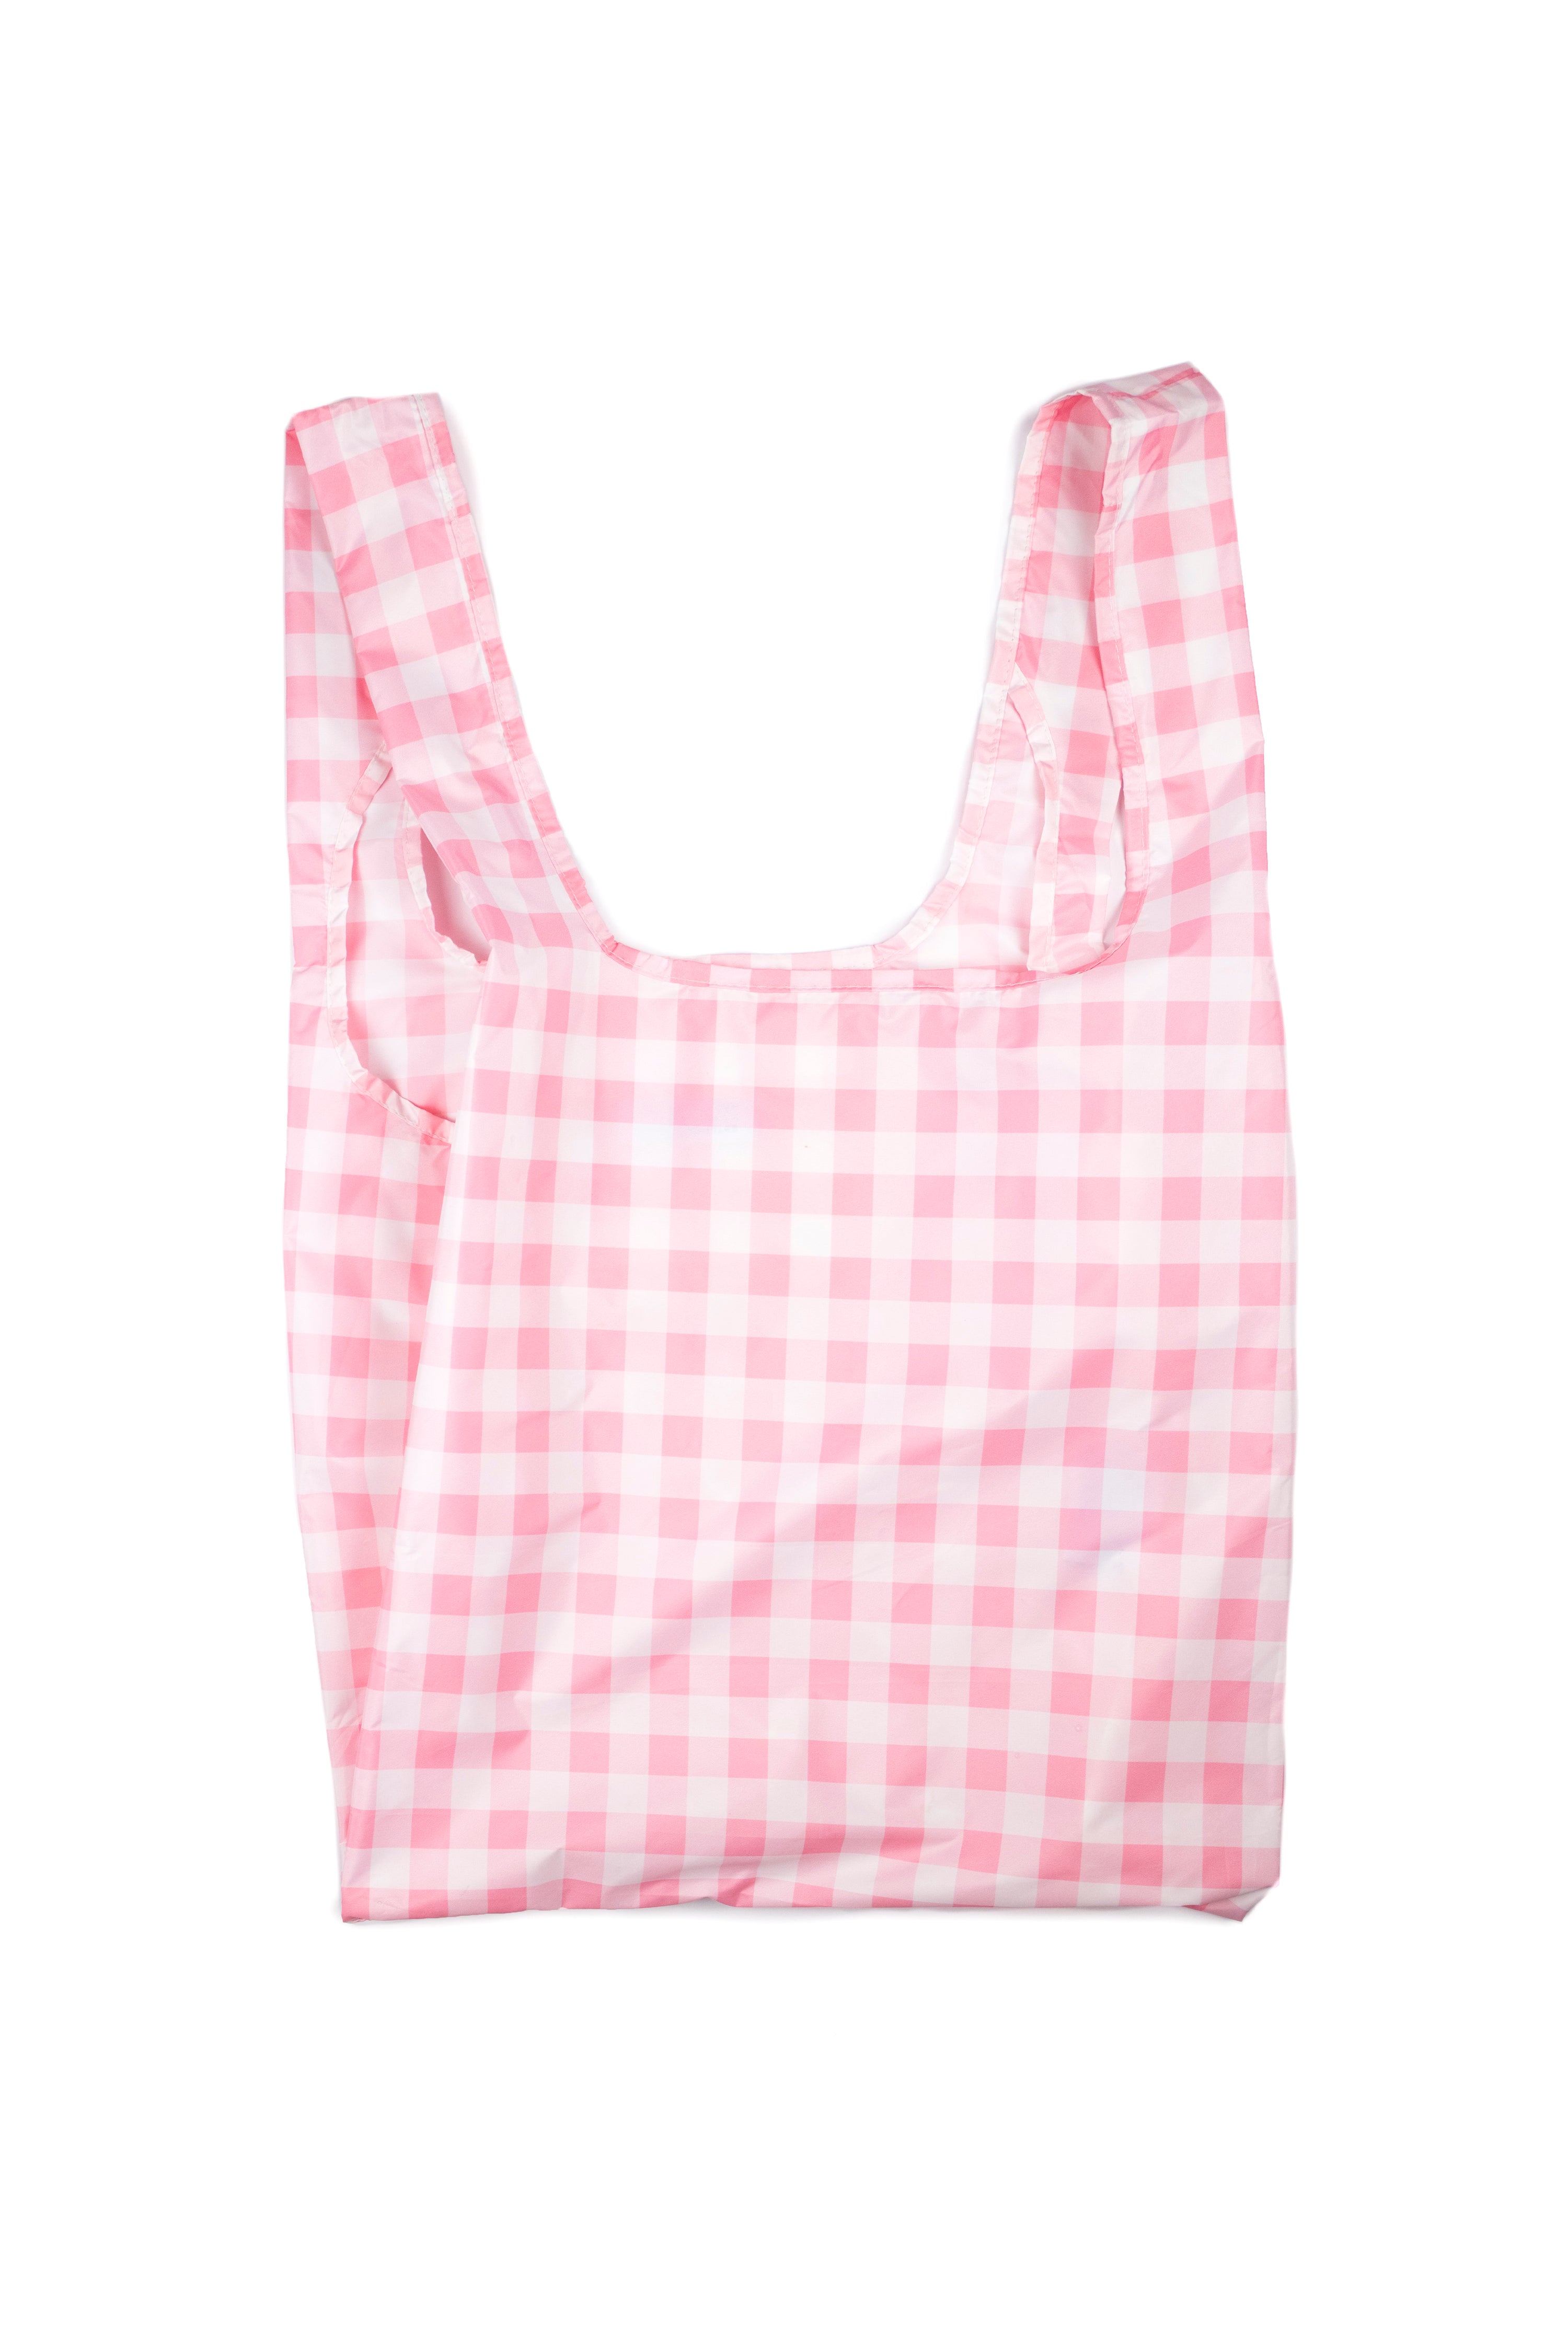 Kind Bag Medium Bubblegum Pink Gingham Reusable Bag 